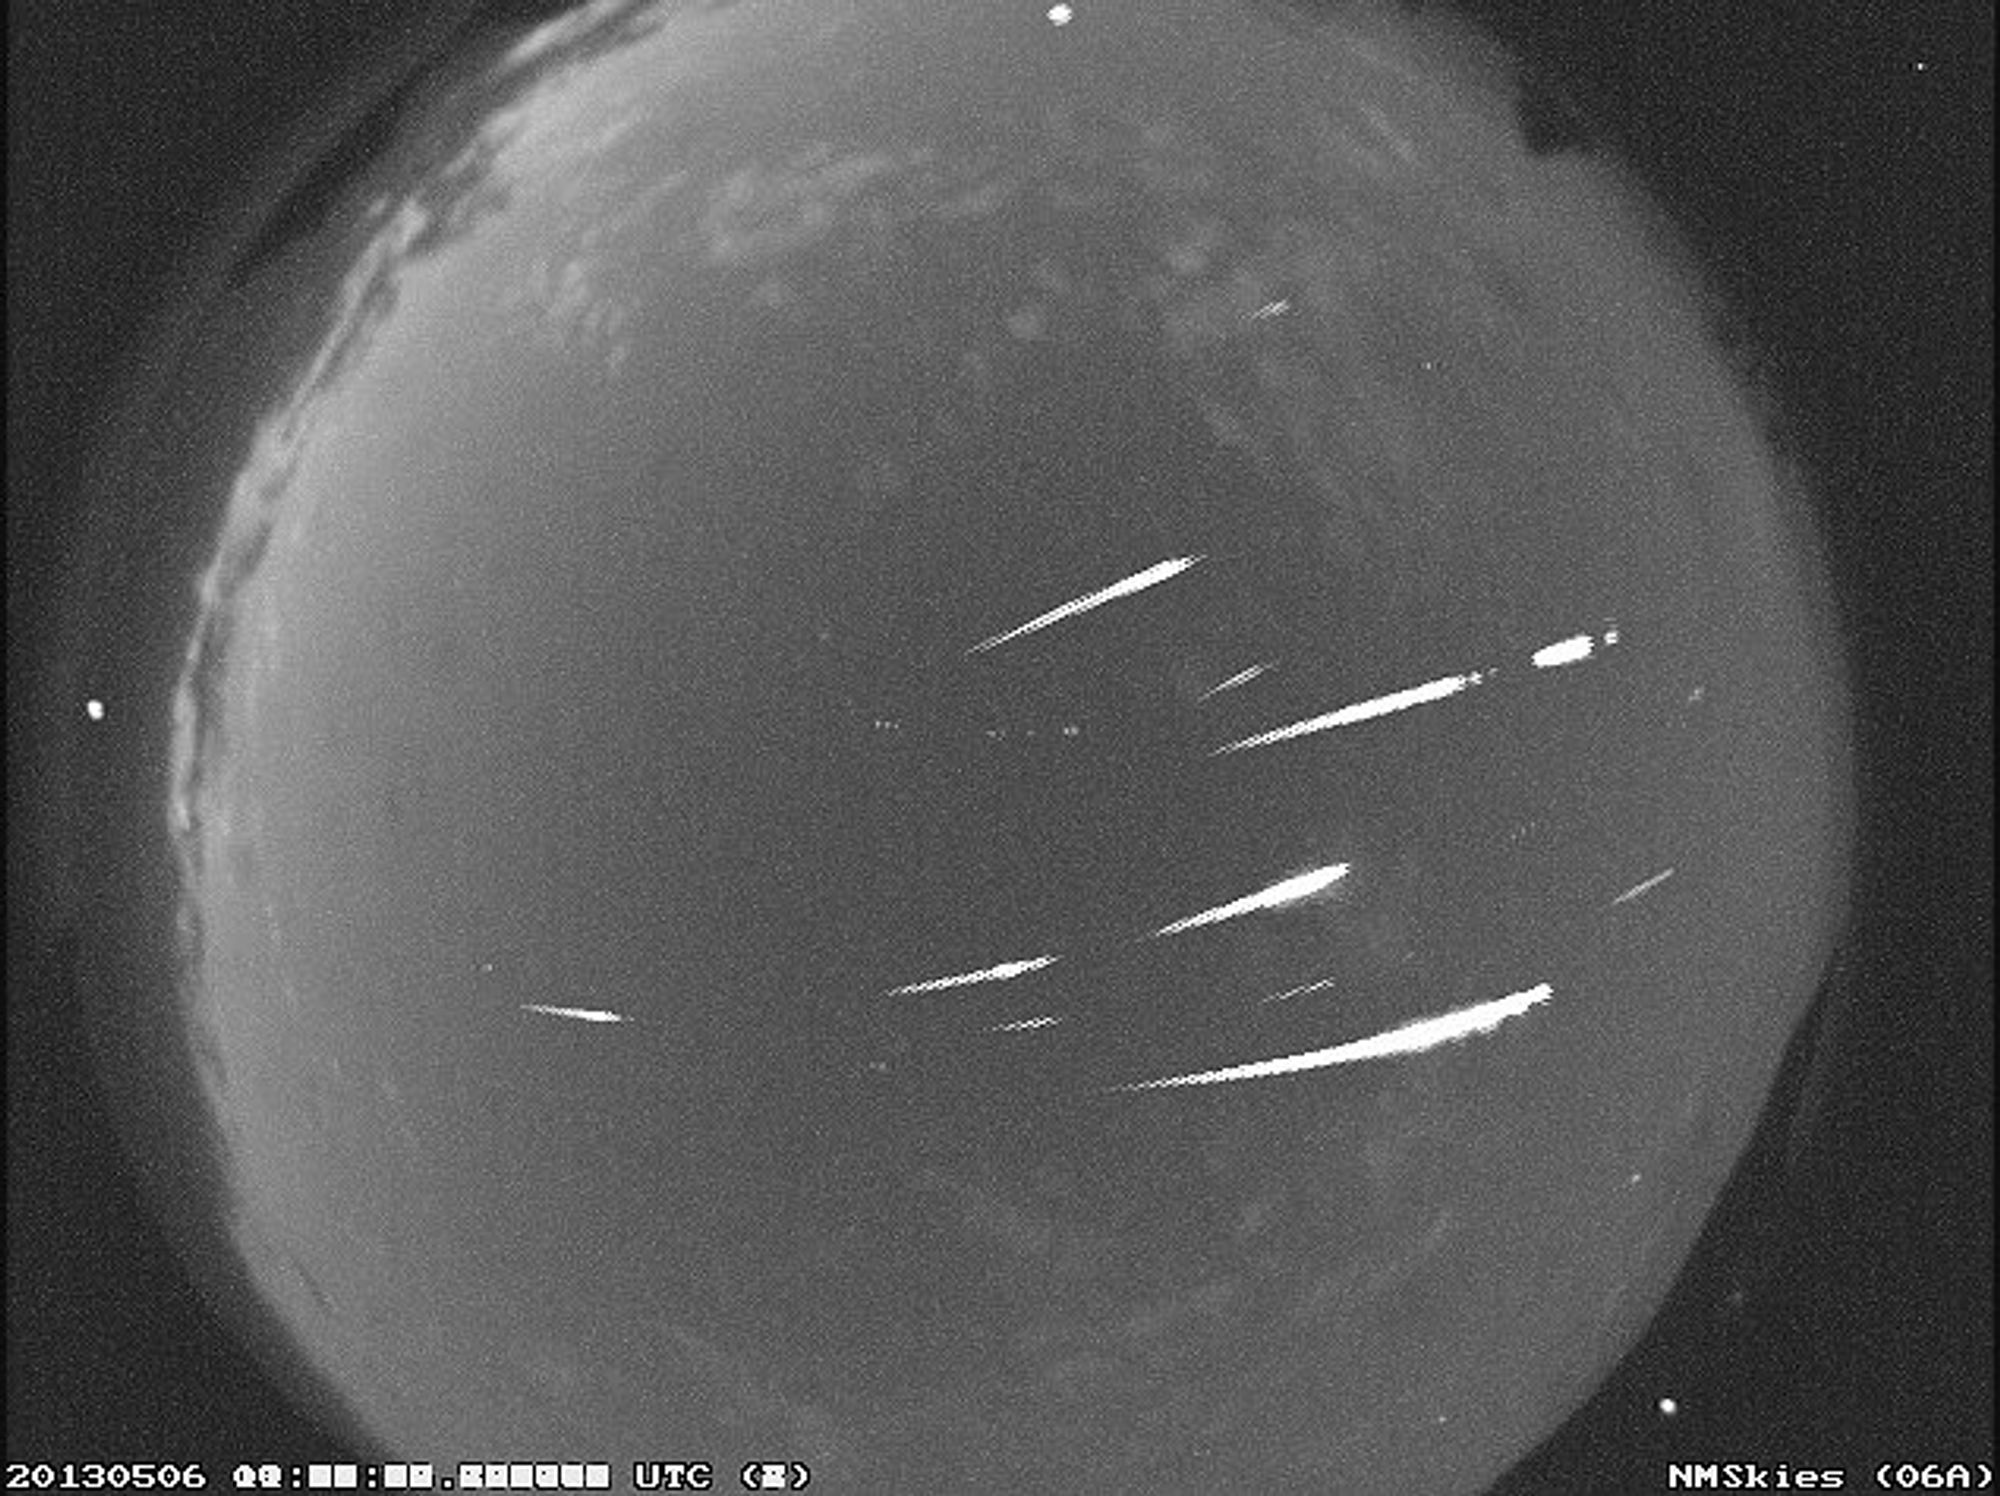 A grey image of meteors streaking across the sky